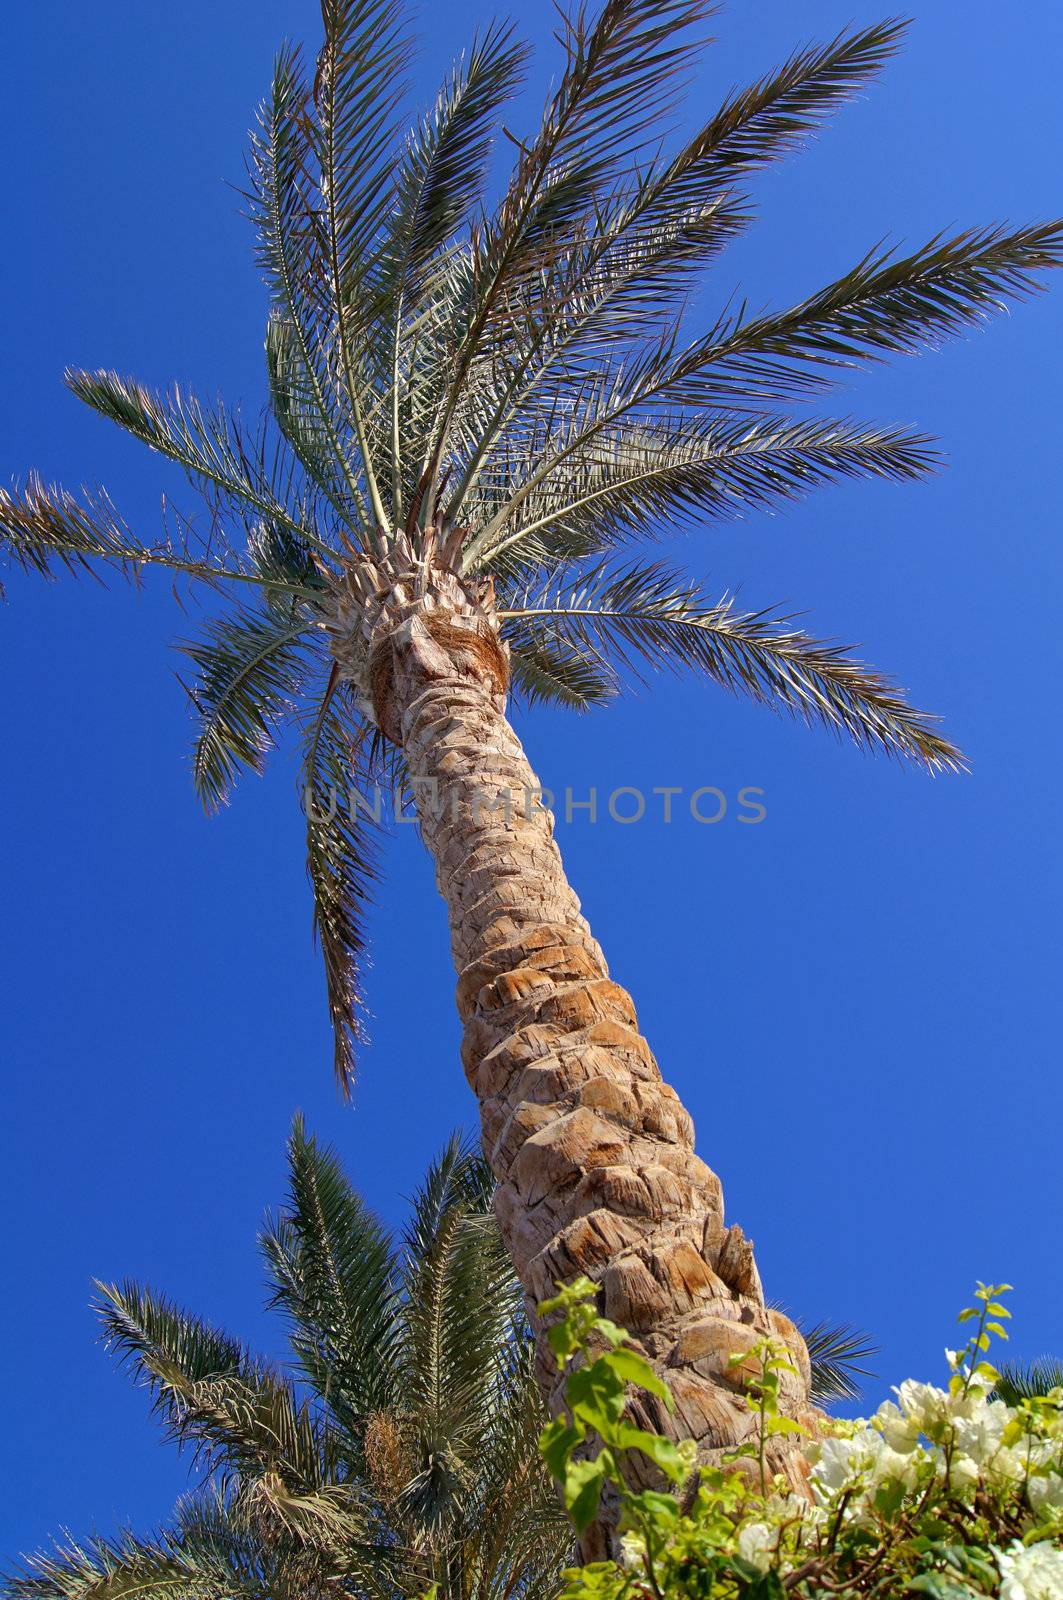 Tropical beach: sun umbrellas and palms